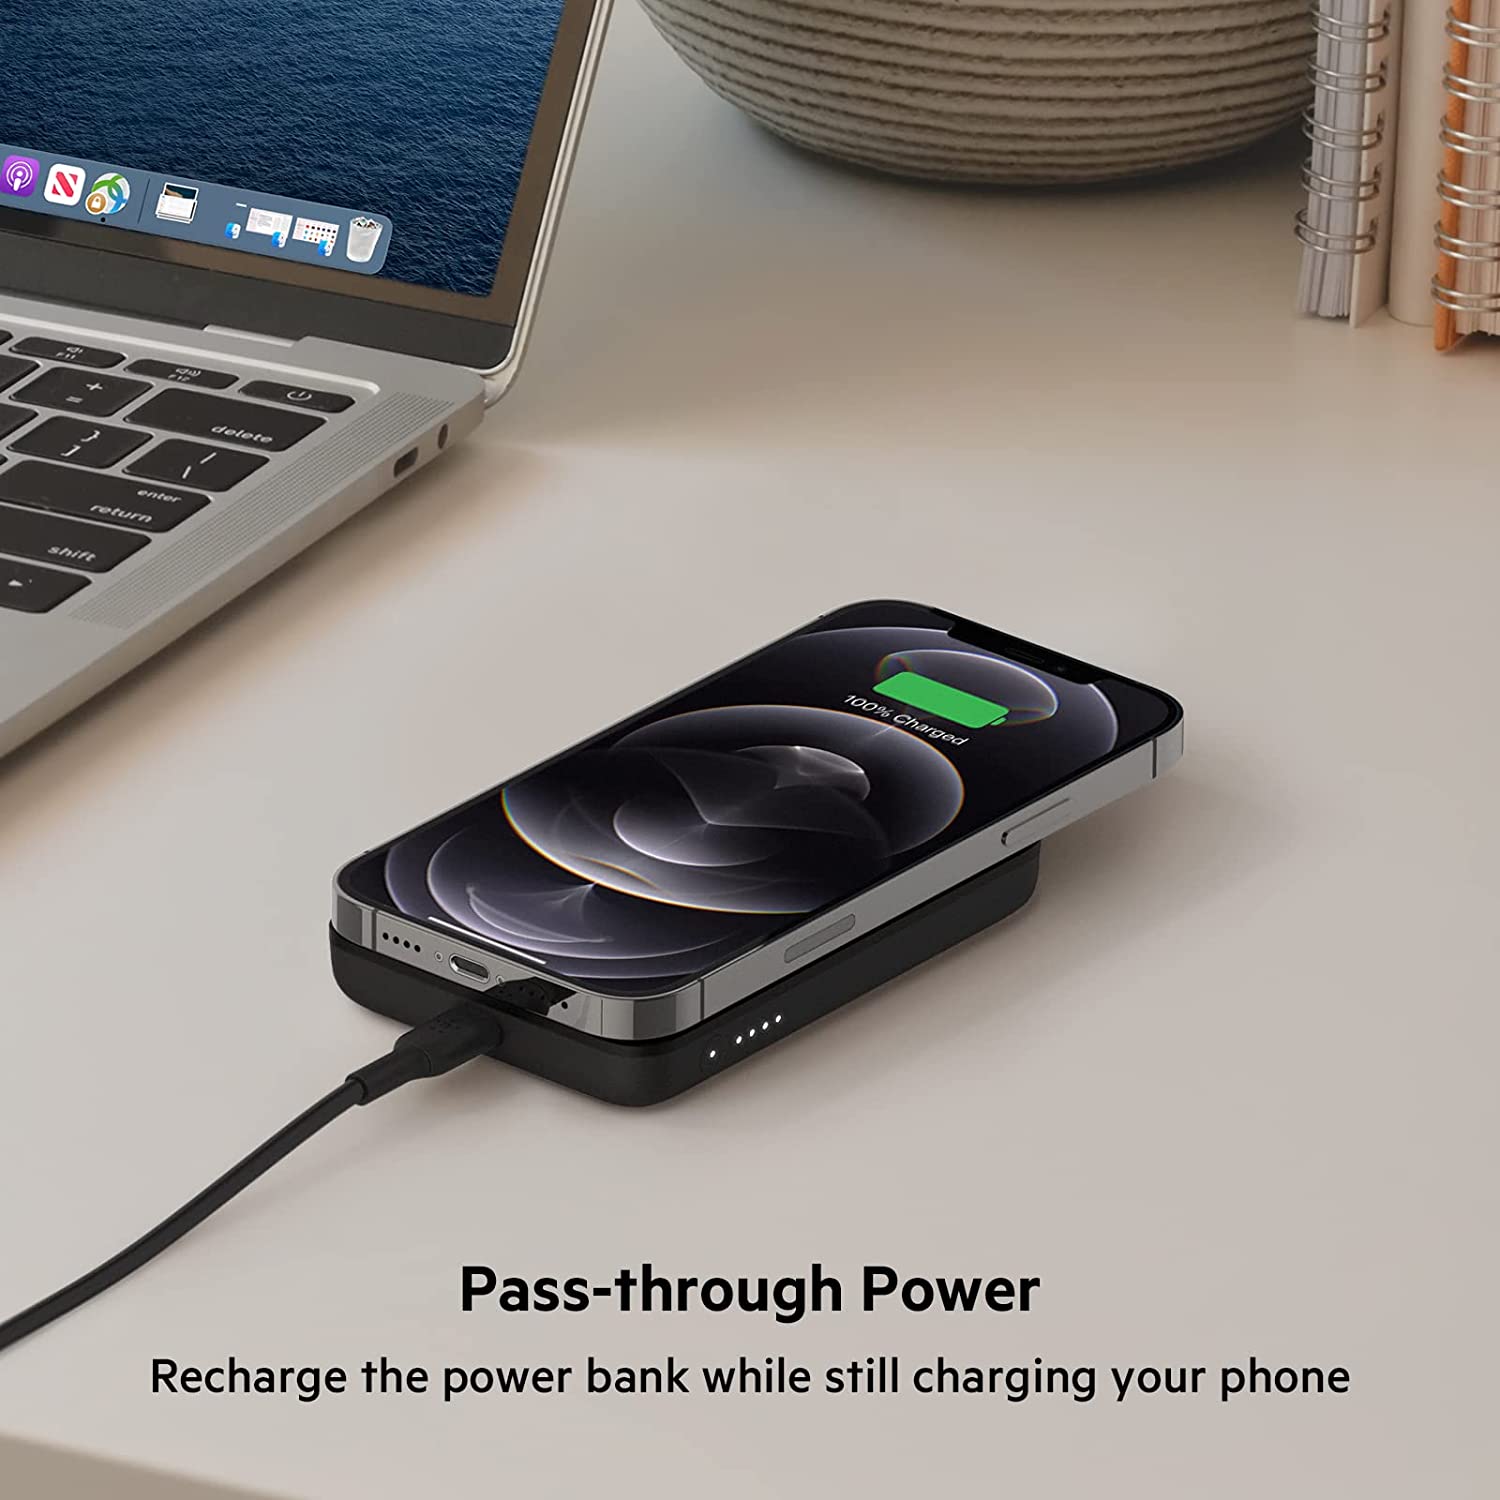 Bateria Externa Belkin Boost Charge (iPhone Magsafe) - 2500mAh